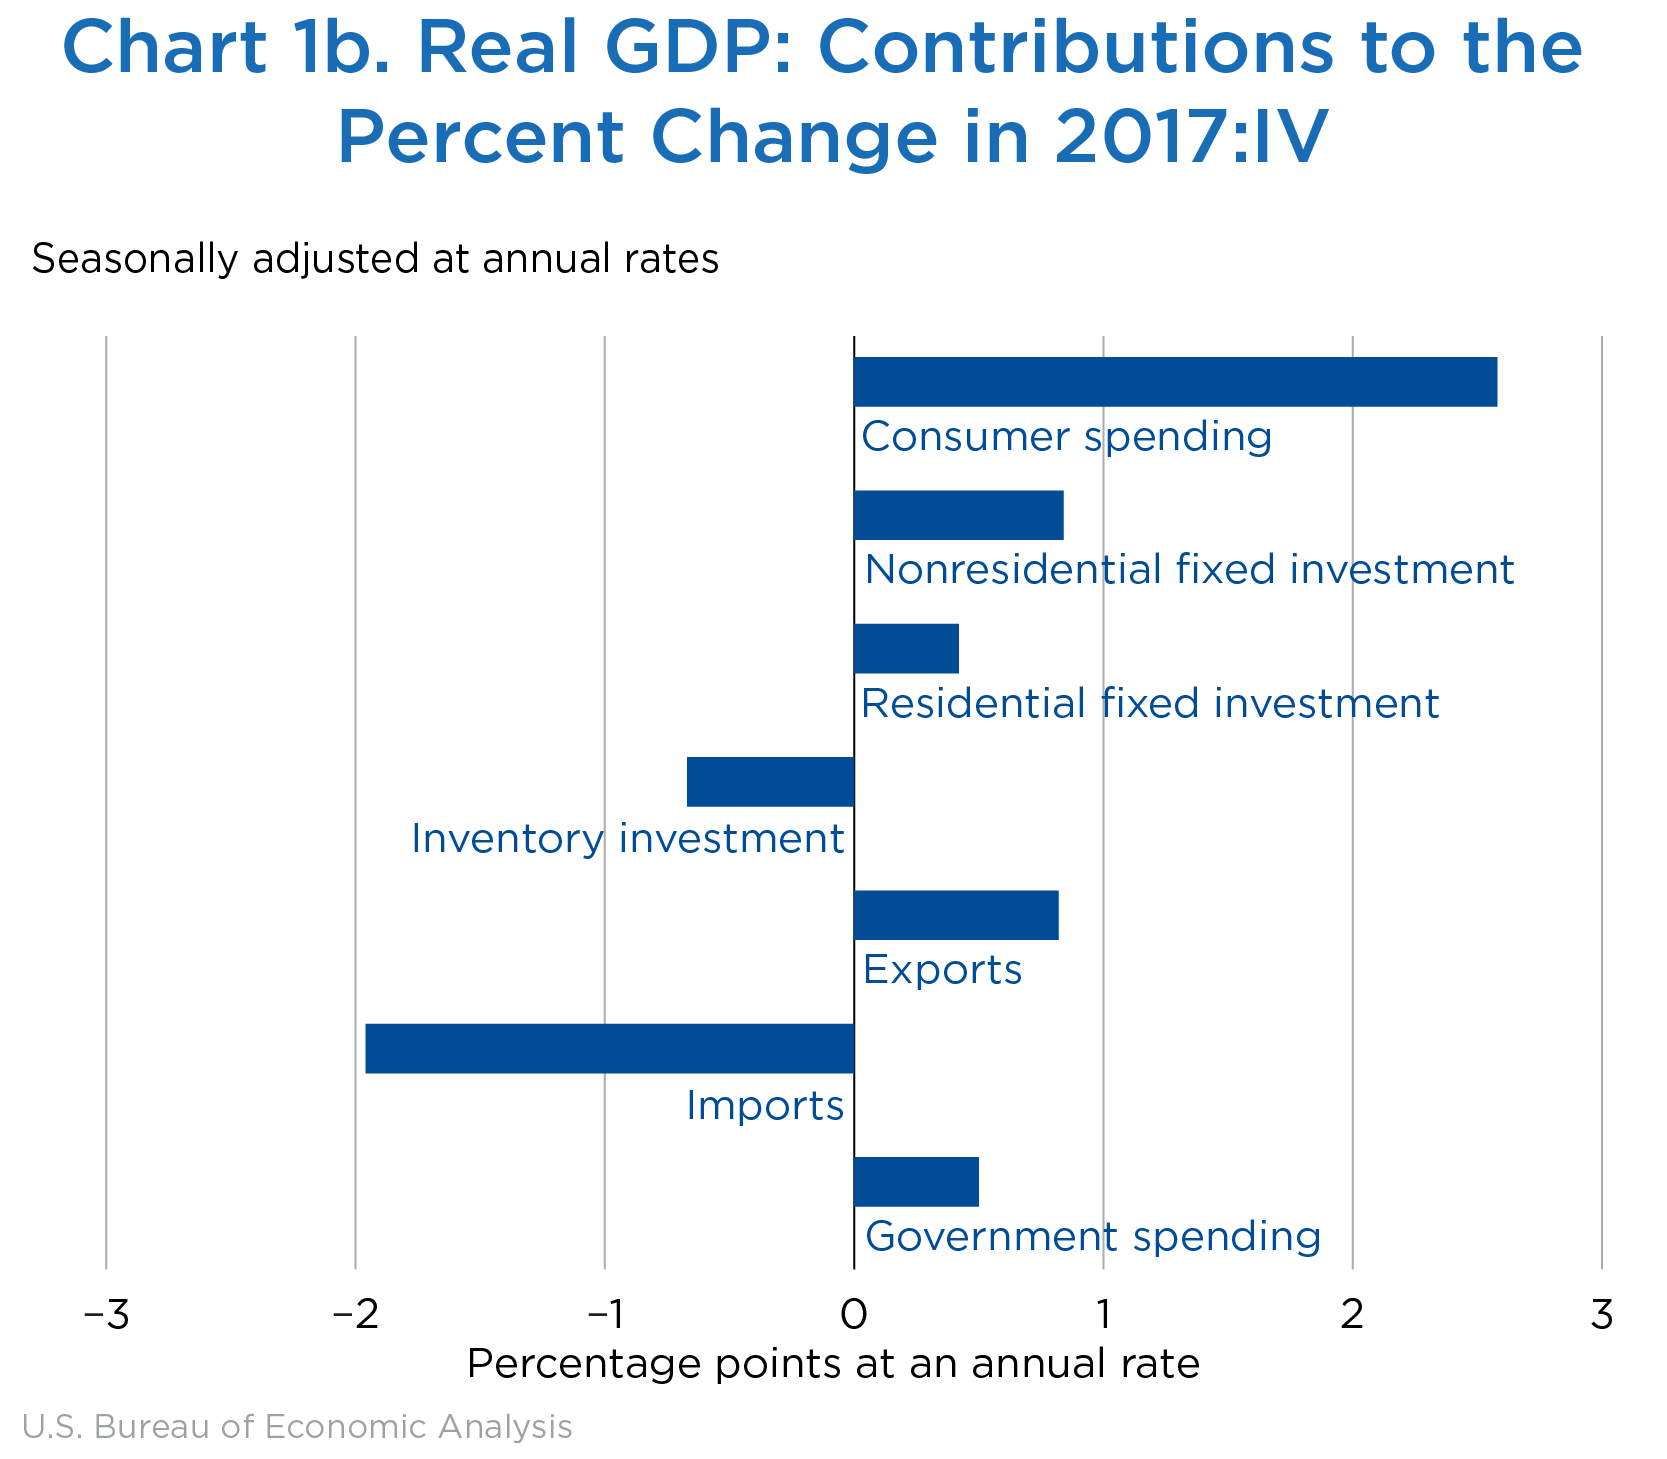 Chart 1b. Real Gross Domestic Product, Bar Chart